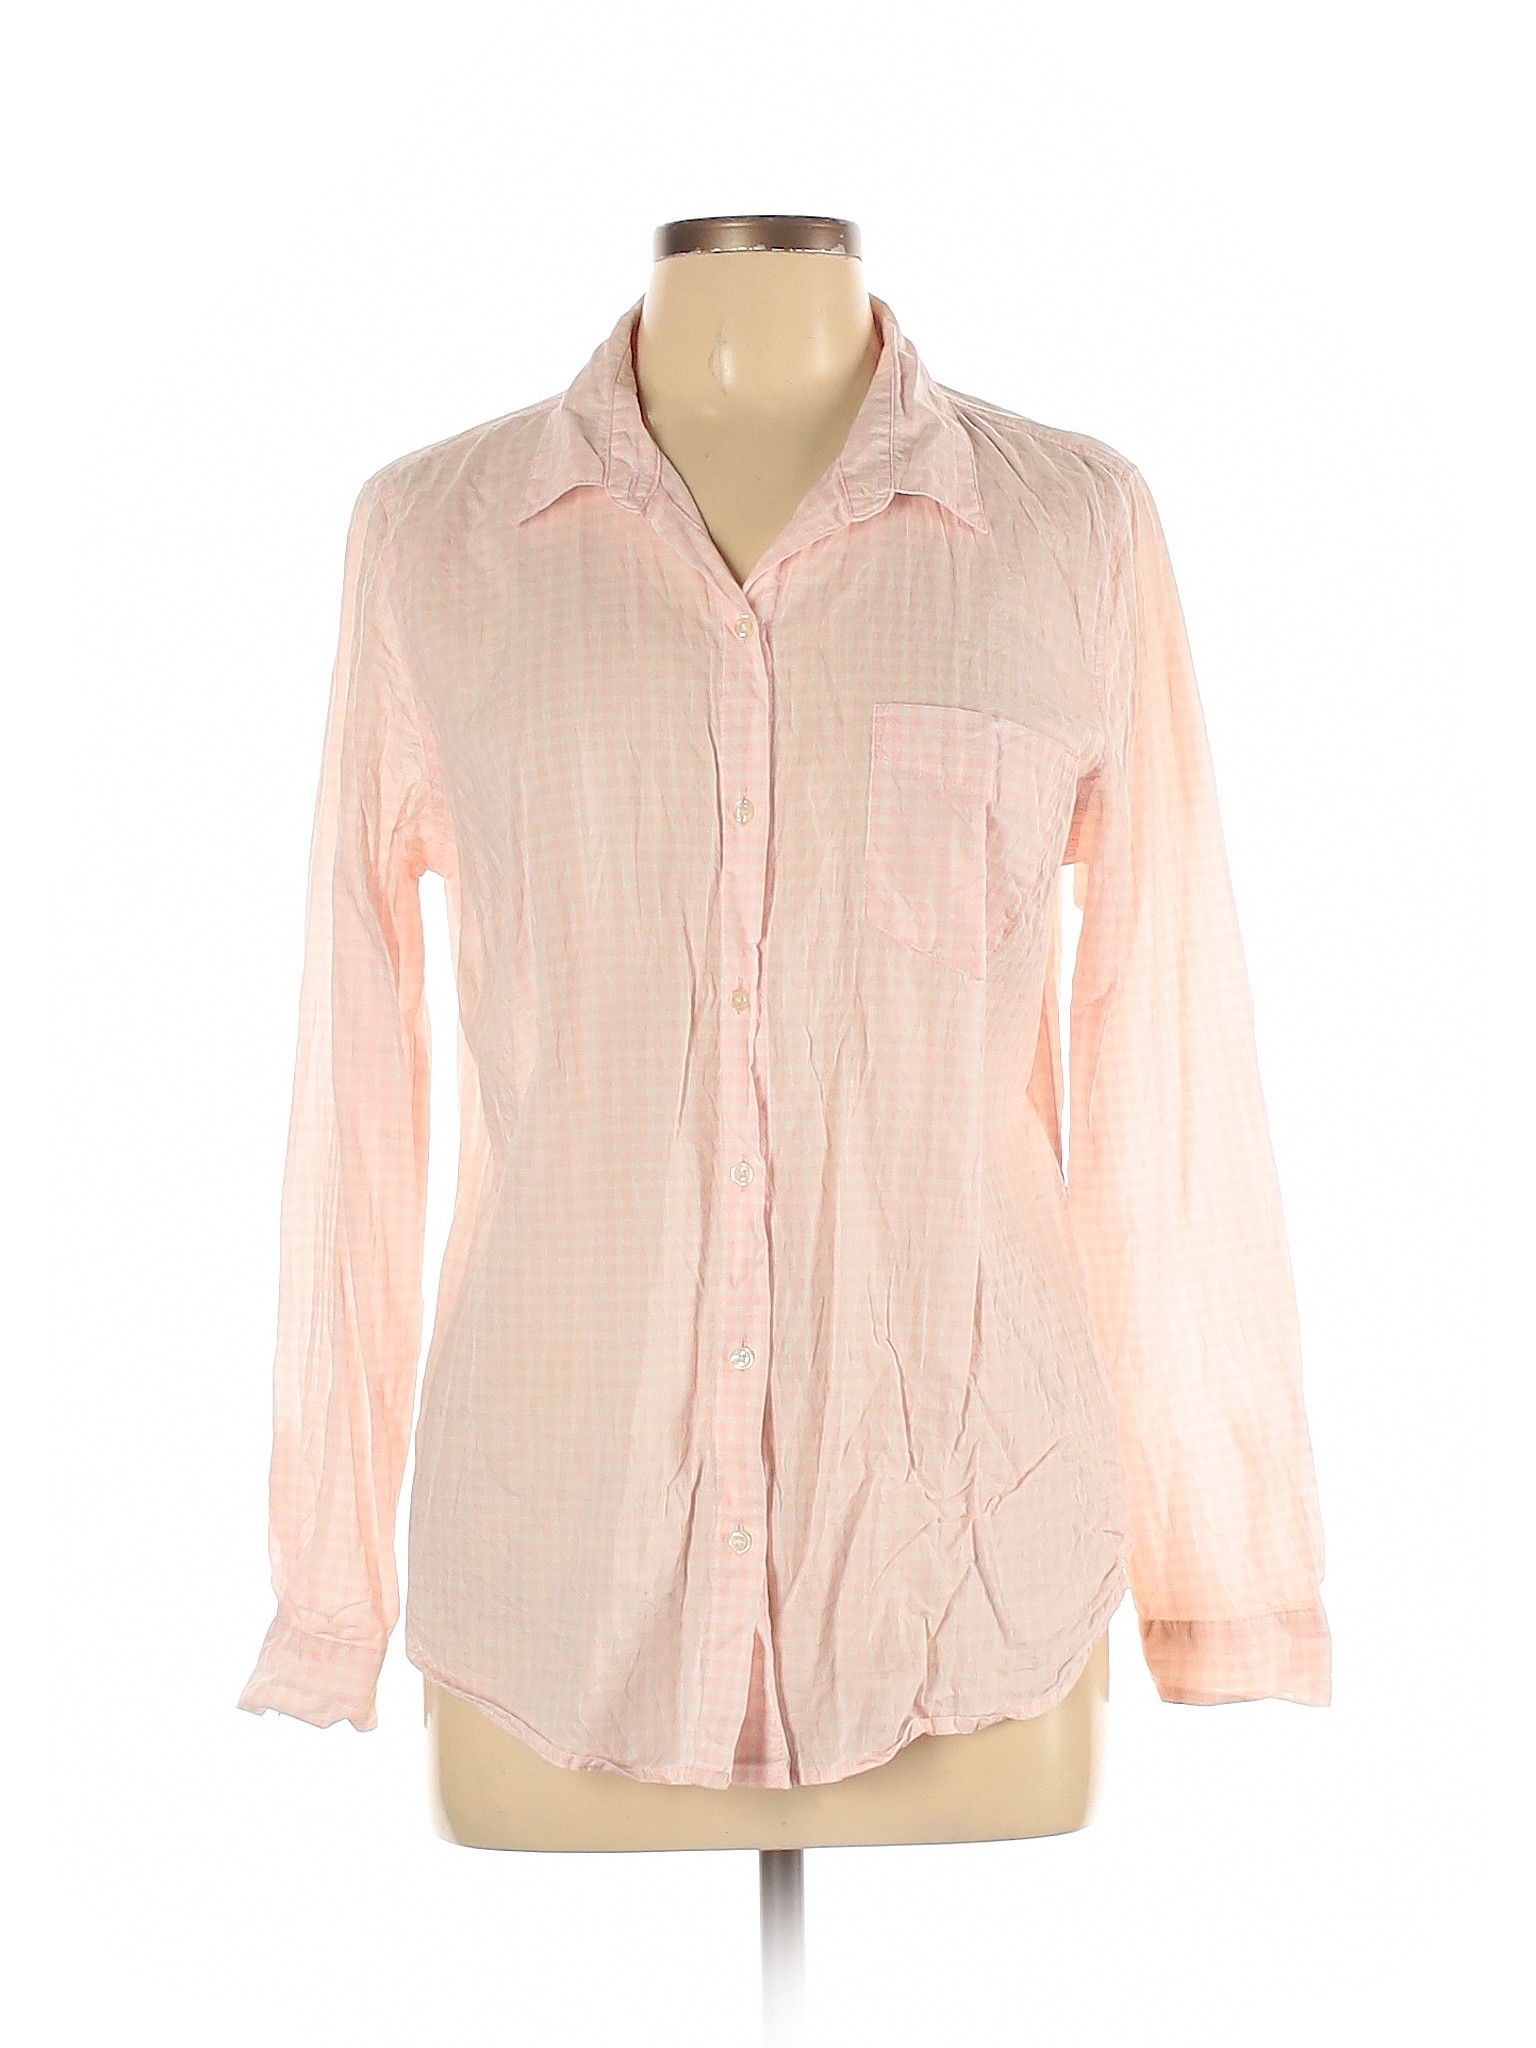 Old Navy Women Pink Long Sleeve Button-Down Shirt L | eBay